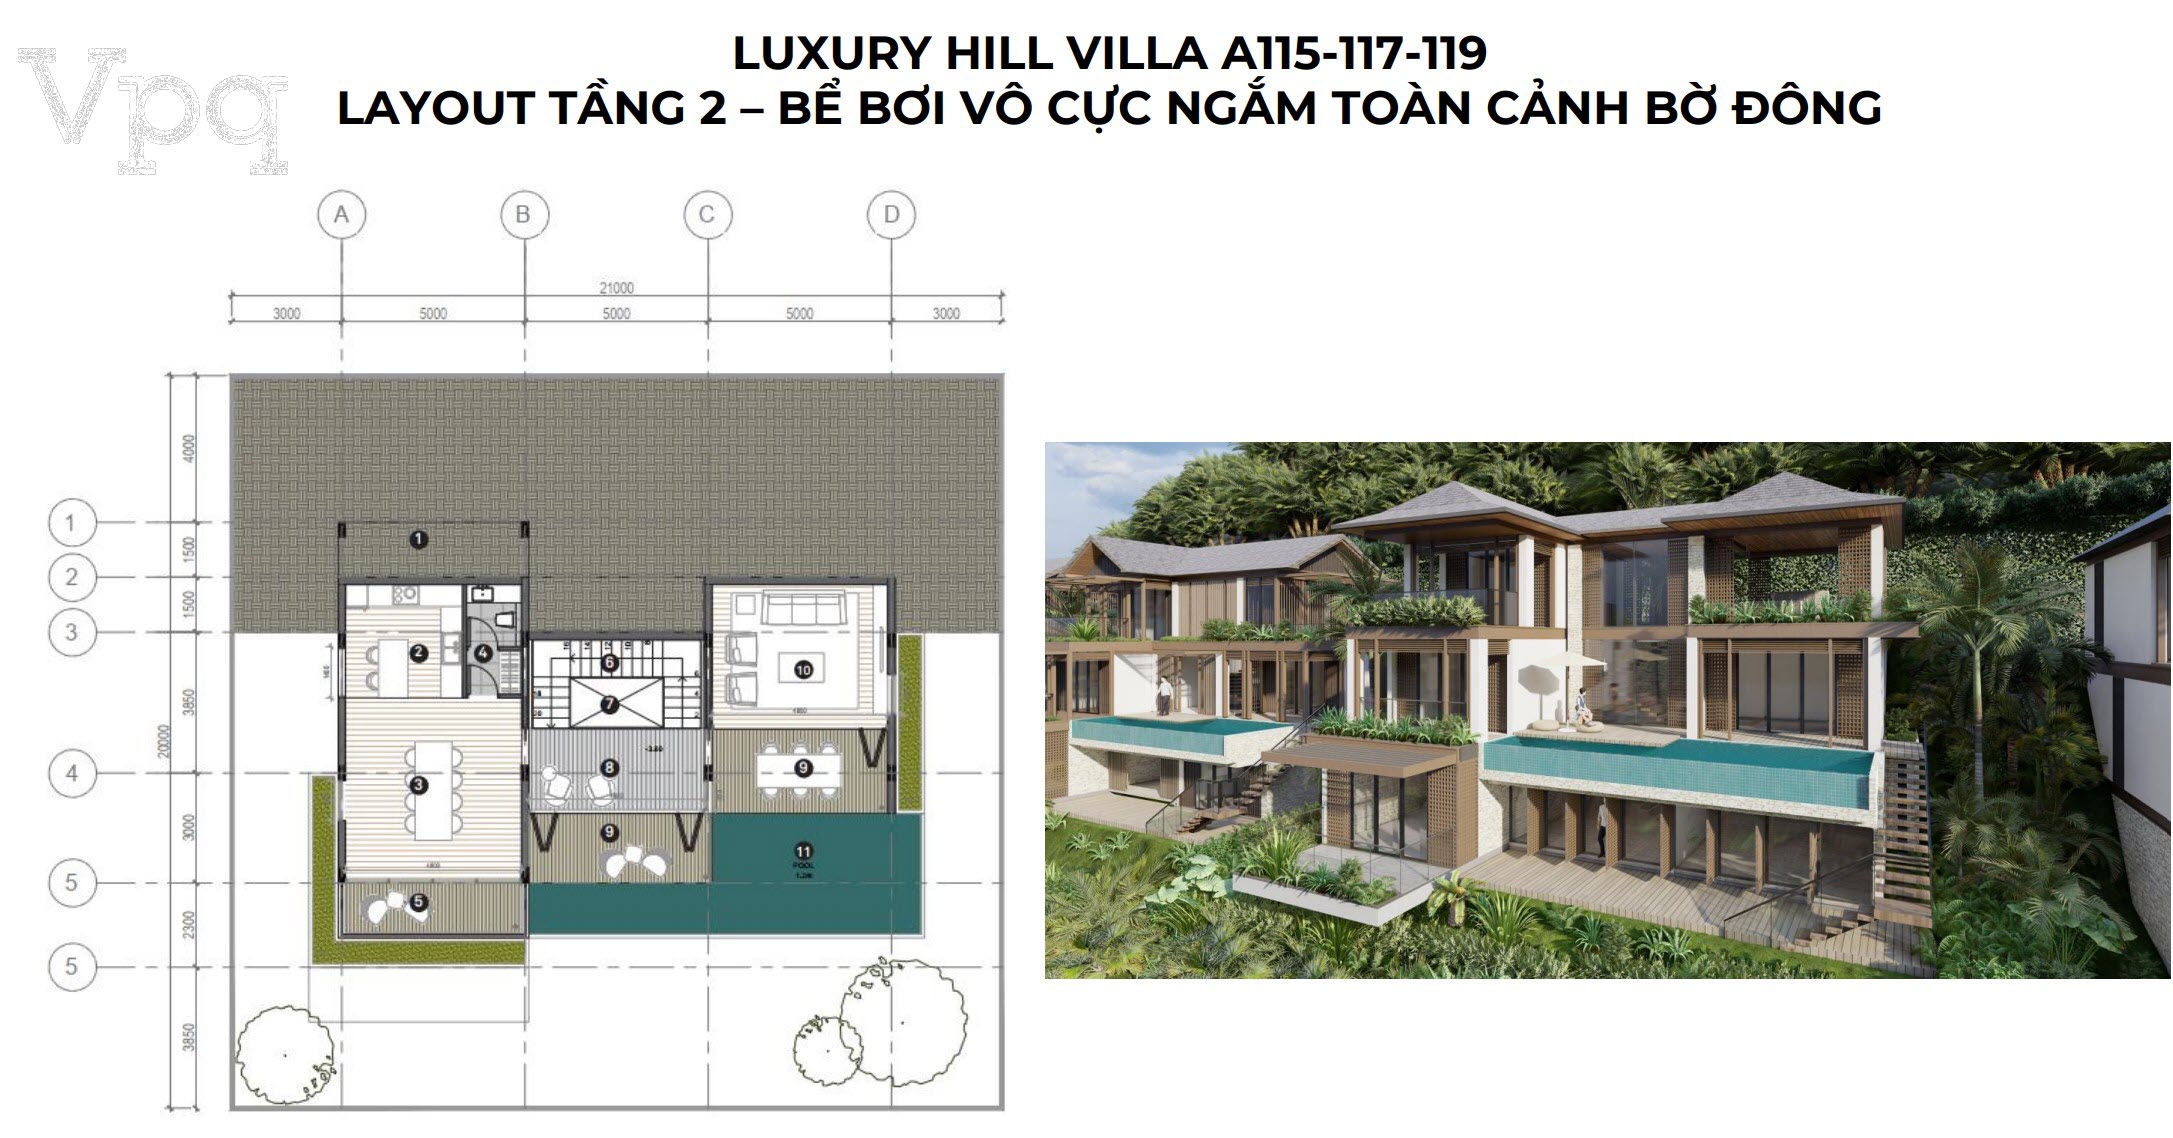 Layout tầng 2 Luxury Hill Villa A115-A117-A119